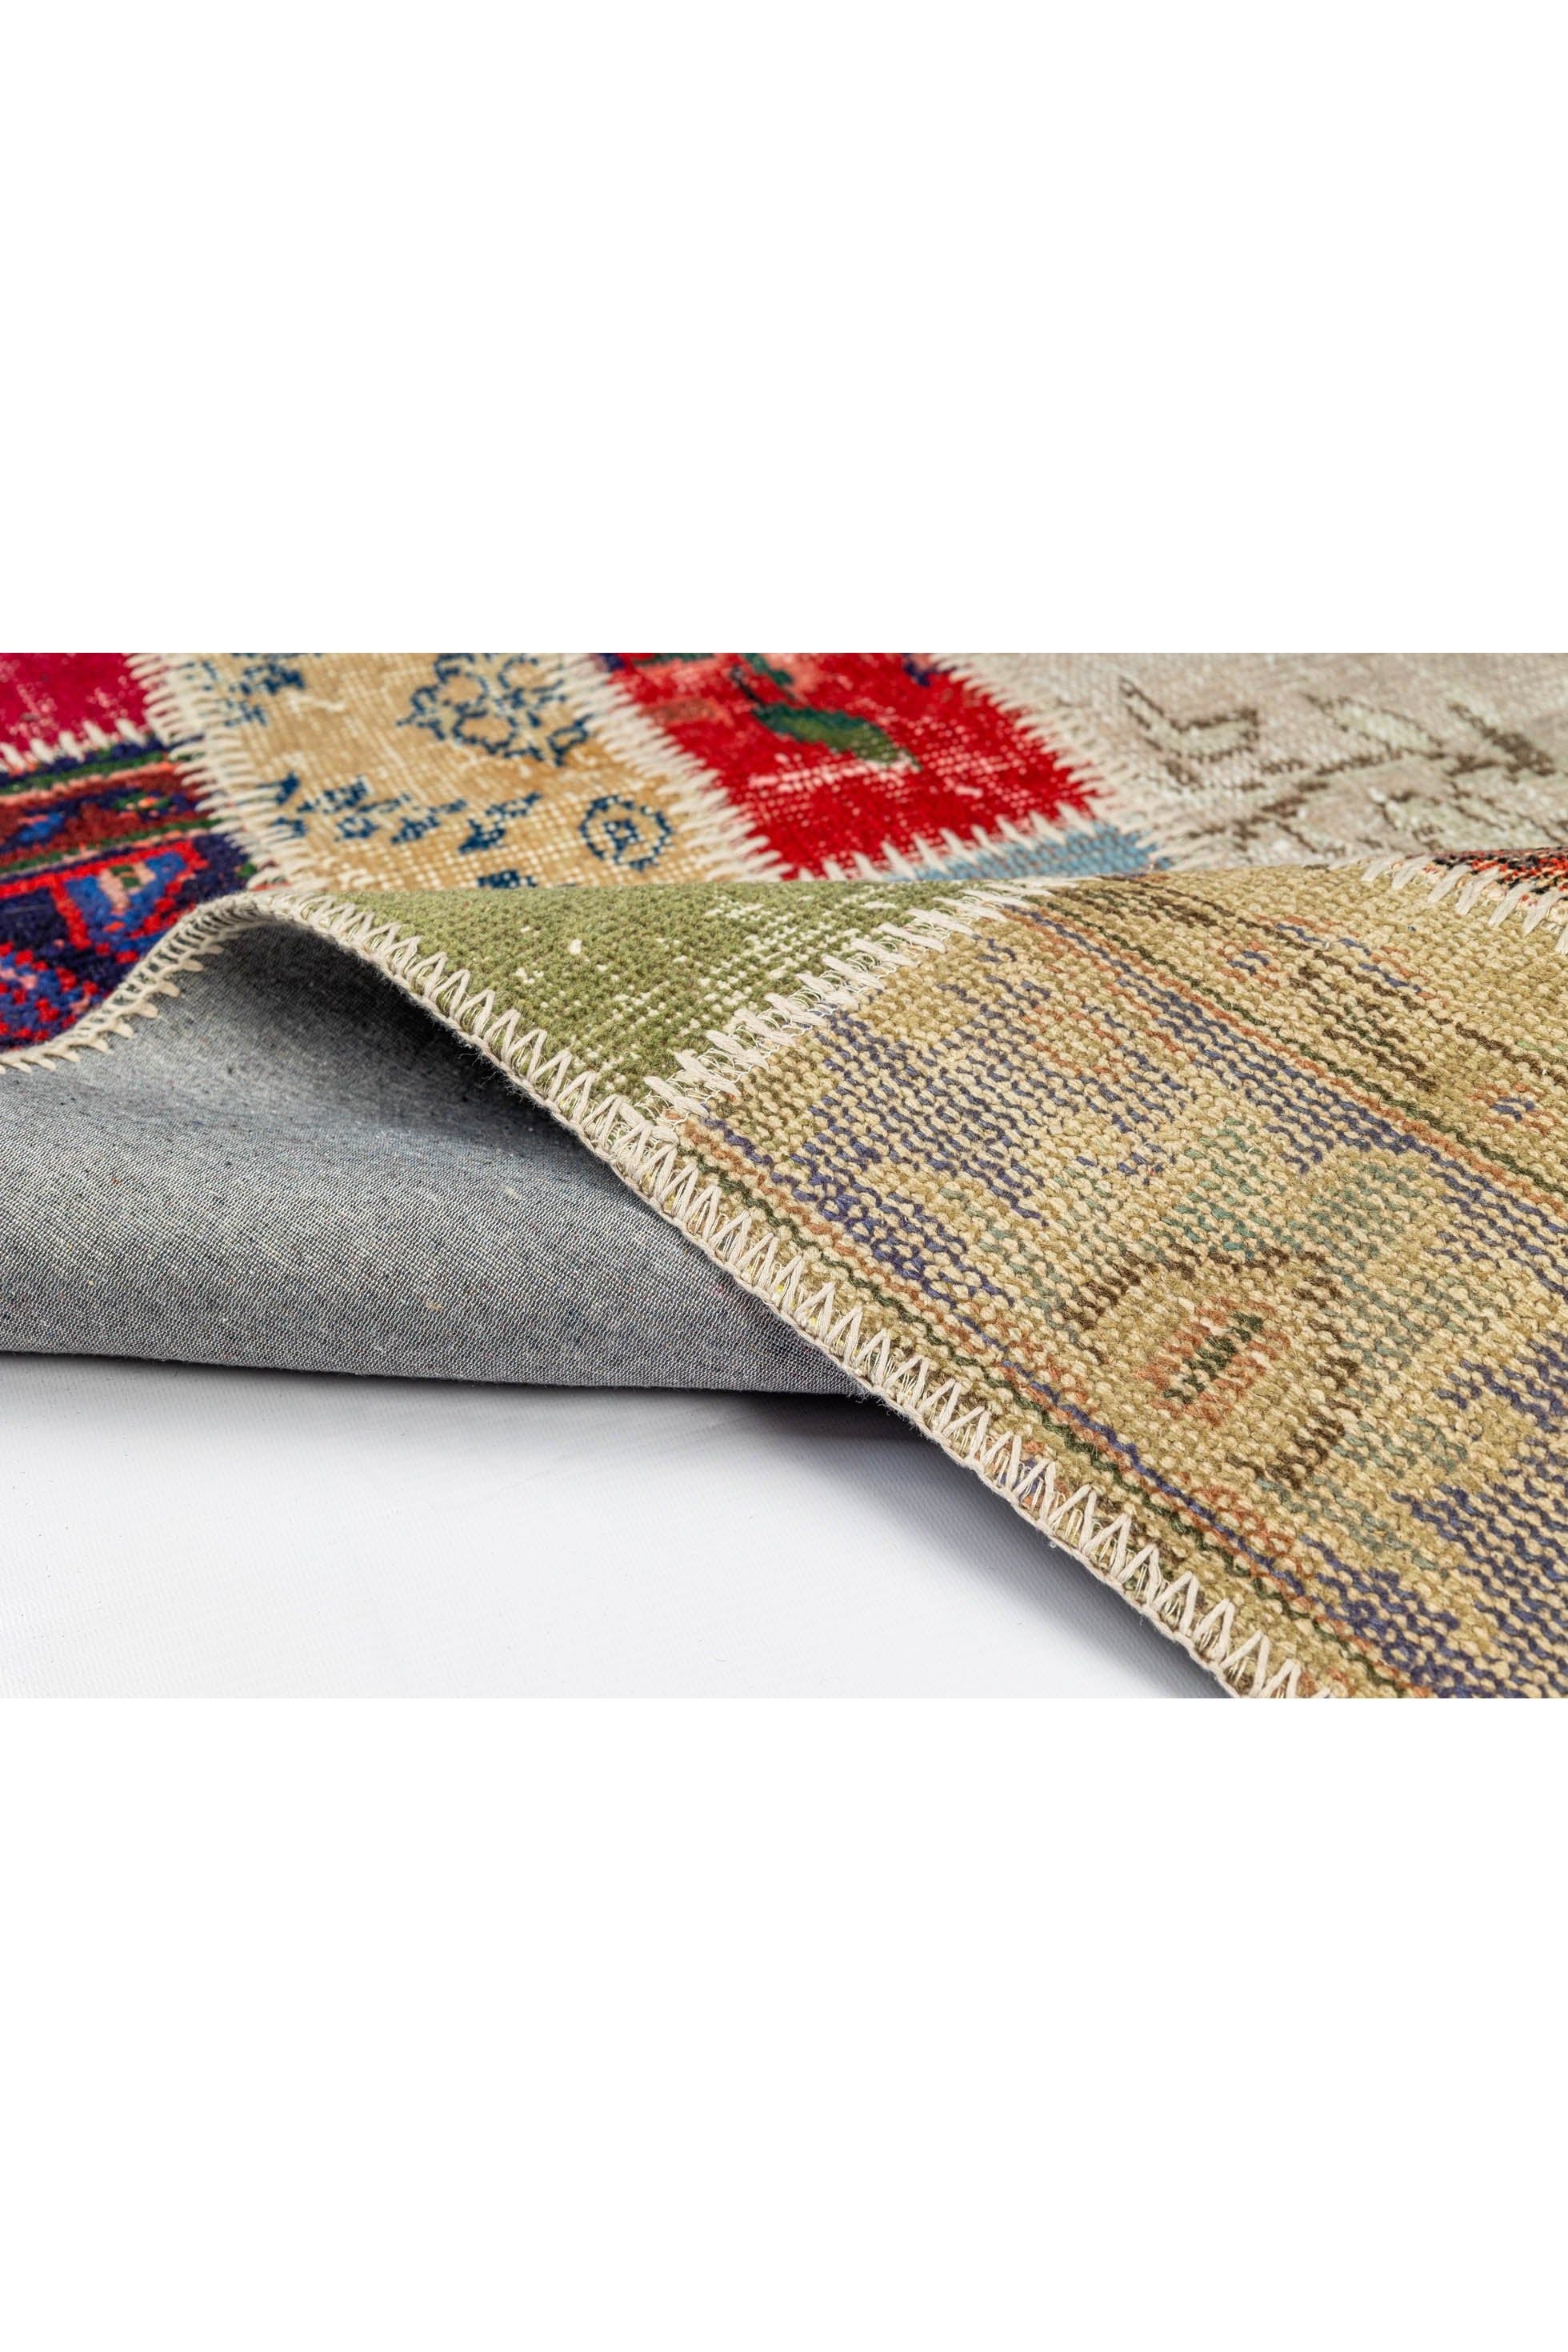 #Turkish_Carpets_Rugs# #Modern_Carpets# #Abrash_Carpets#Abrash-Runner 88-74X301